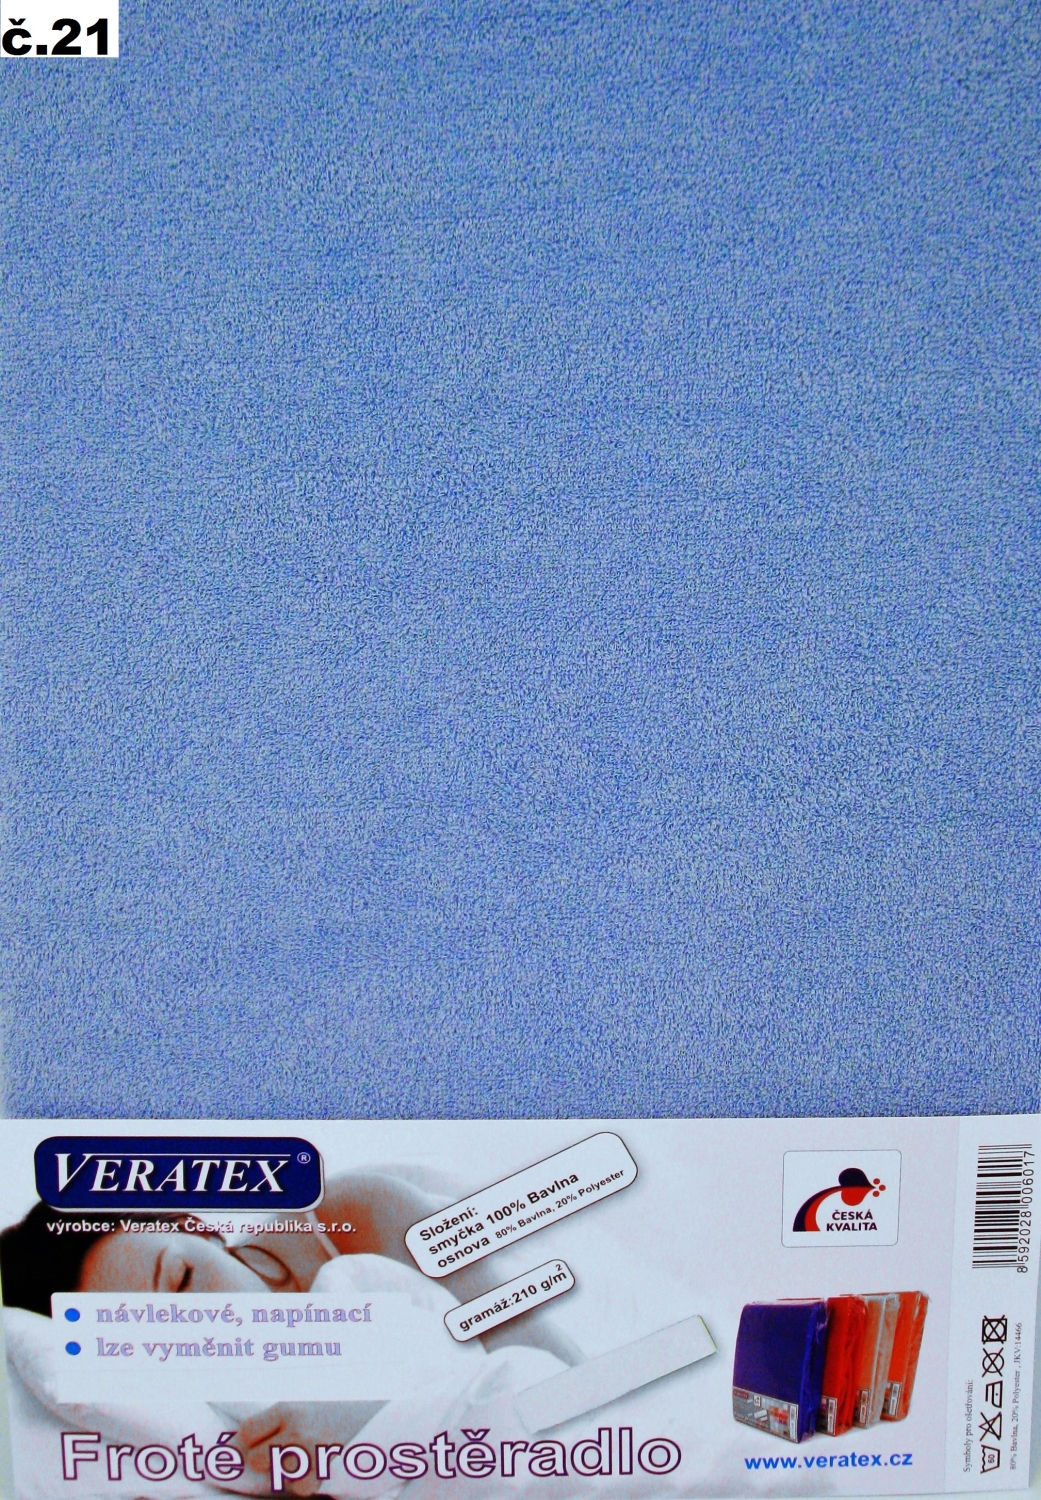 Veratex Froté prostěradlo 160x200/16 cm (č.21-sv.modrá)